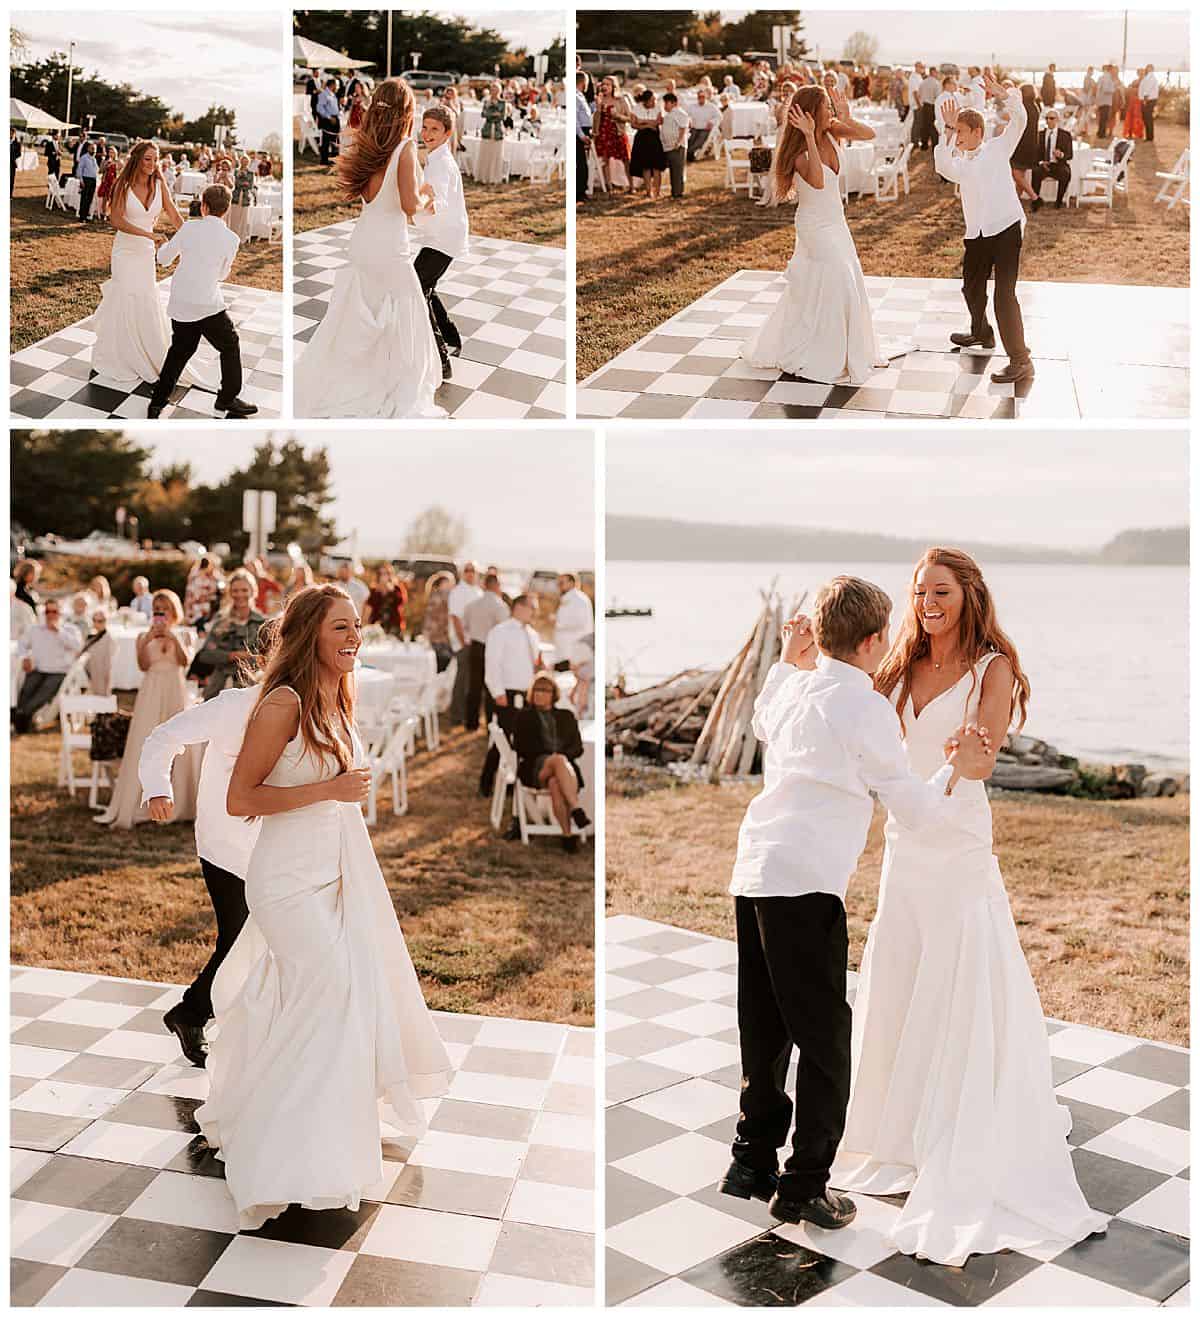 Checkerboard dance floor at this waterfront backyard wedding in Port Gamble, WA